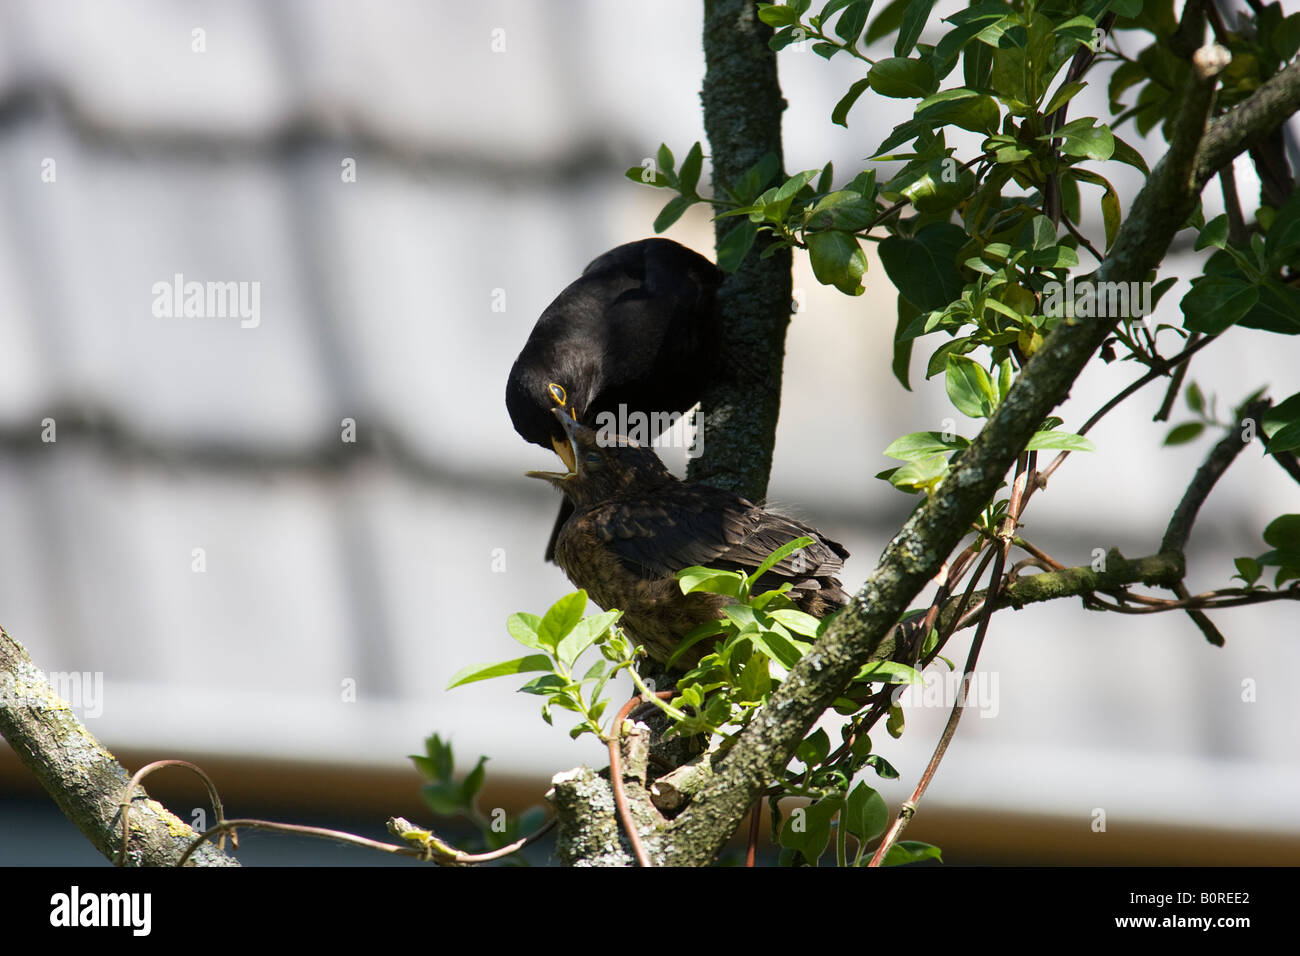 Fledgling common blackbird, Turdus merula, being fed by an adult male blackbird. Stock Photo